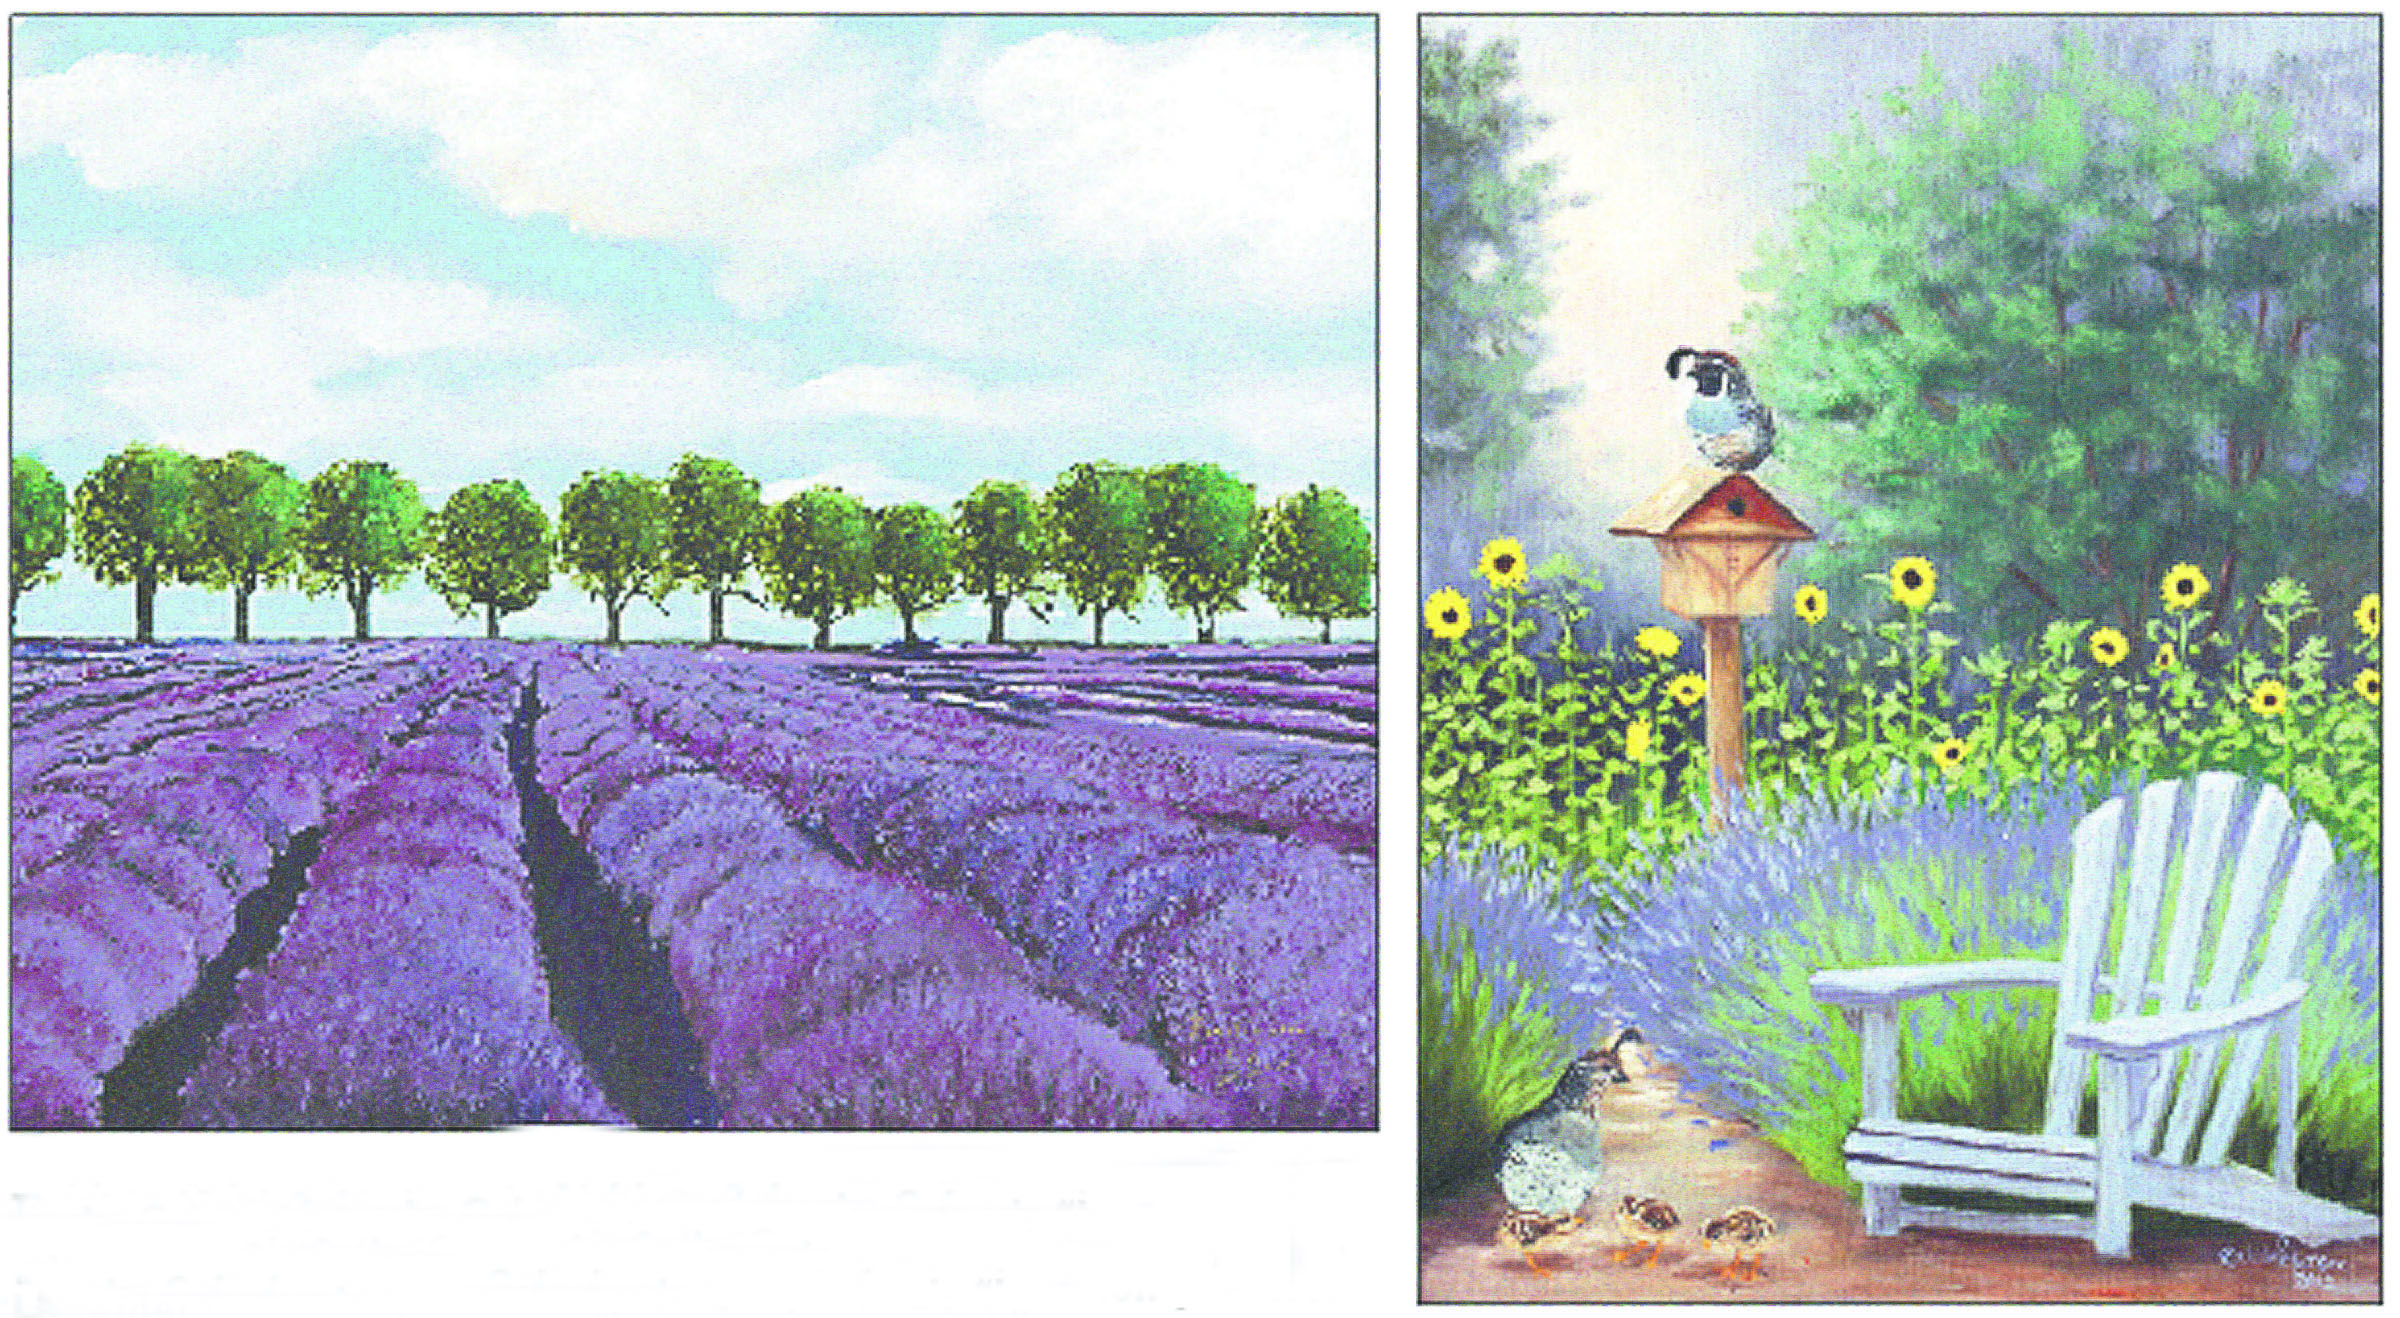 Sequim Lavender Farm Fair chose “Lavender Fields Forever